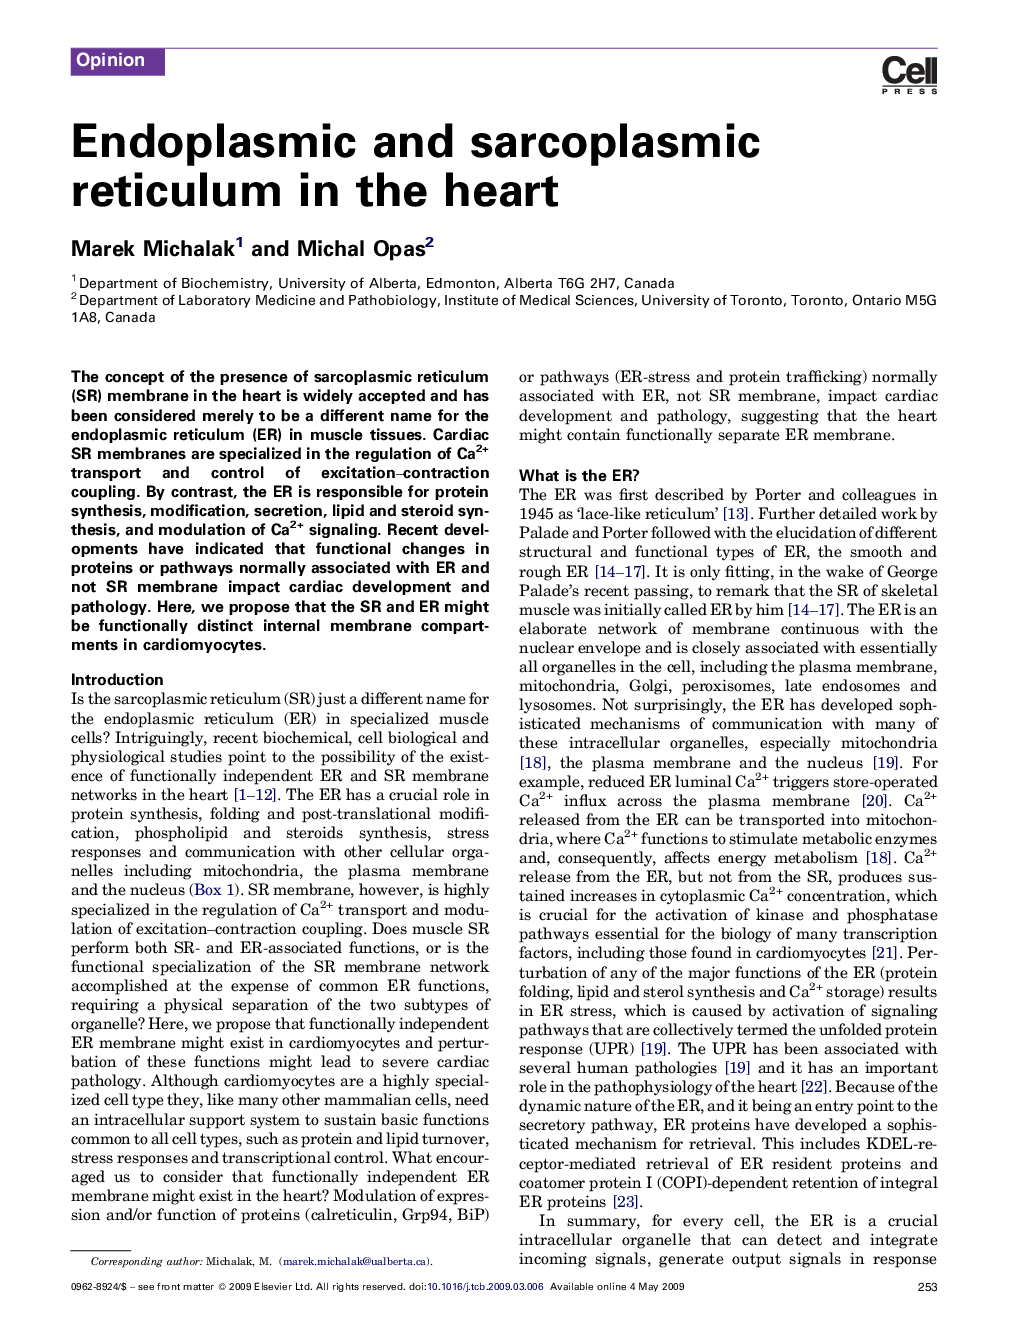 Endoplasmic and sarcoplasmic reticulum in the heart